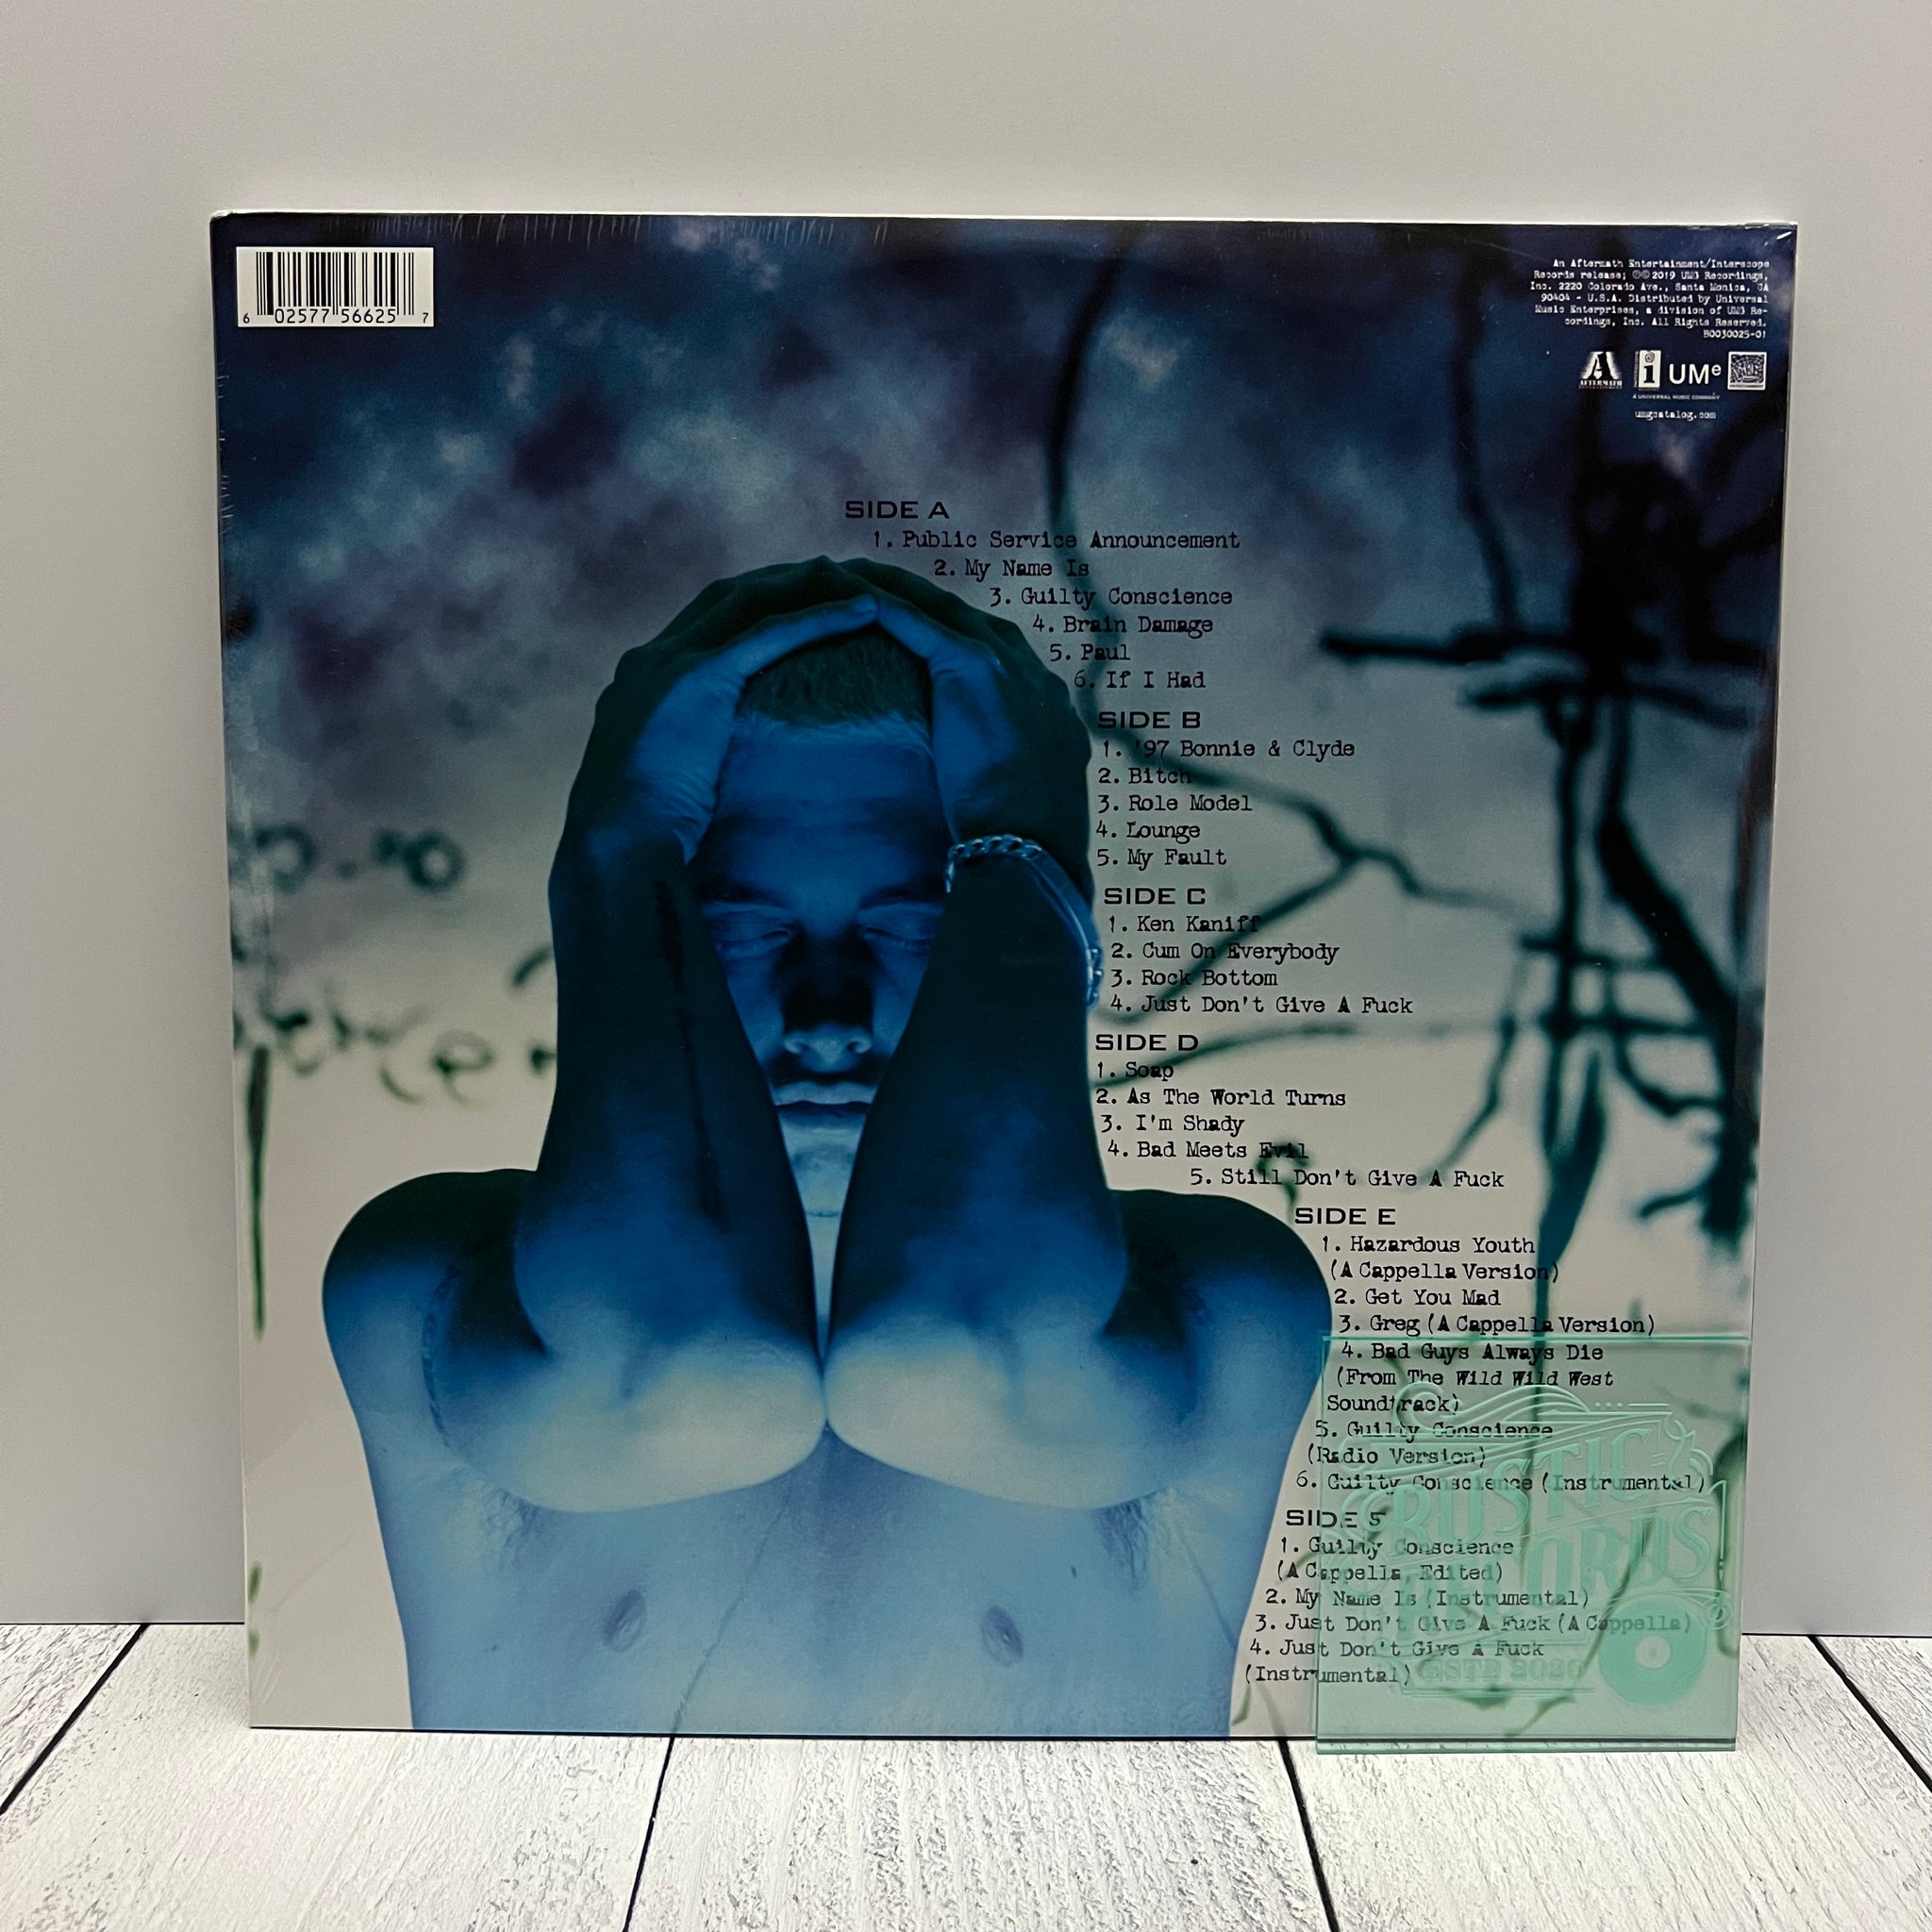 Eminem - The Slim Shady LP Expanded 3LP Edition